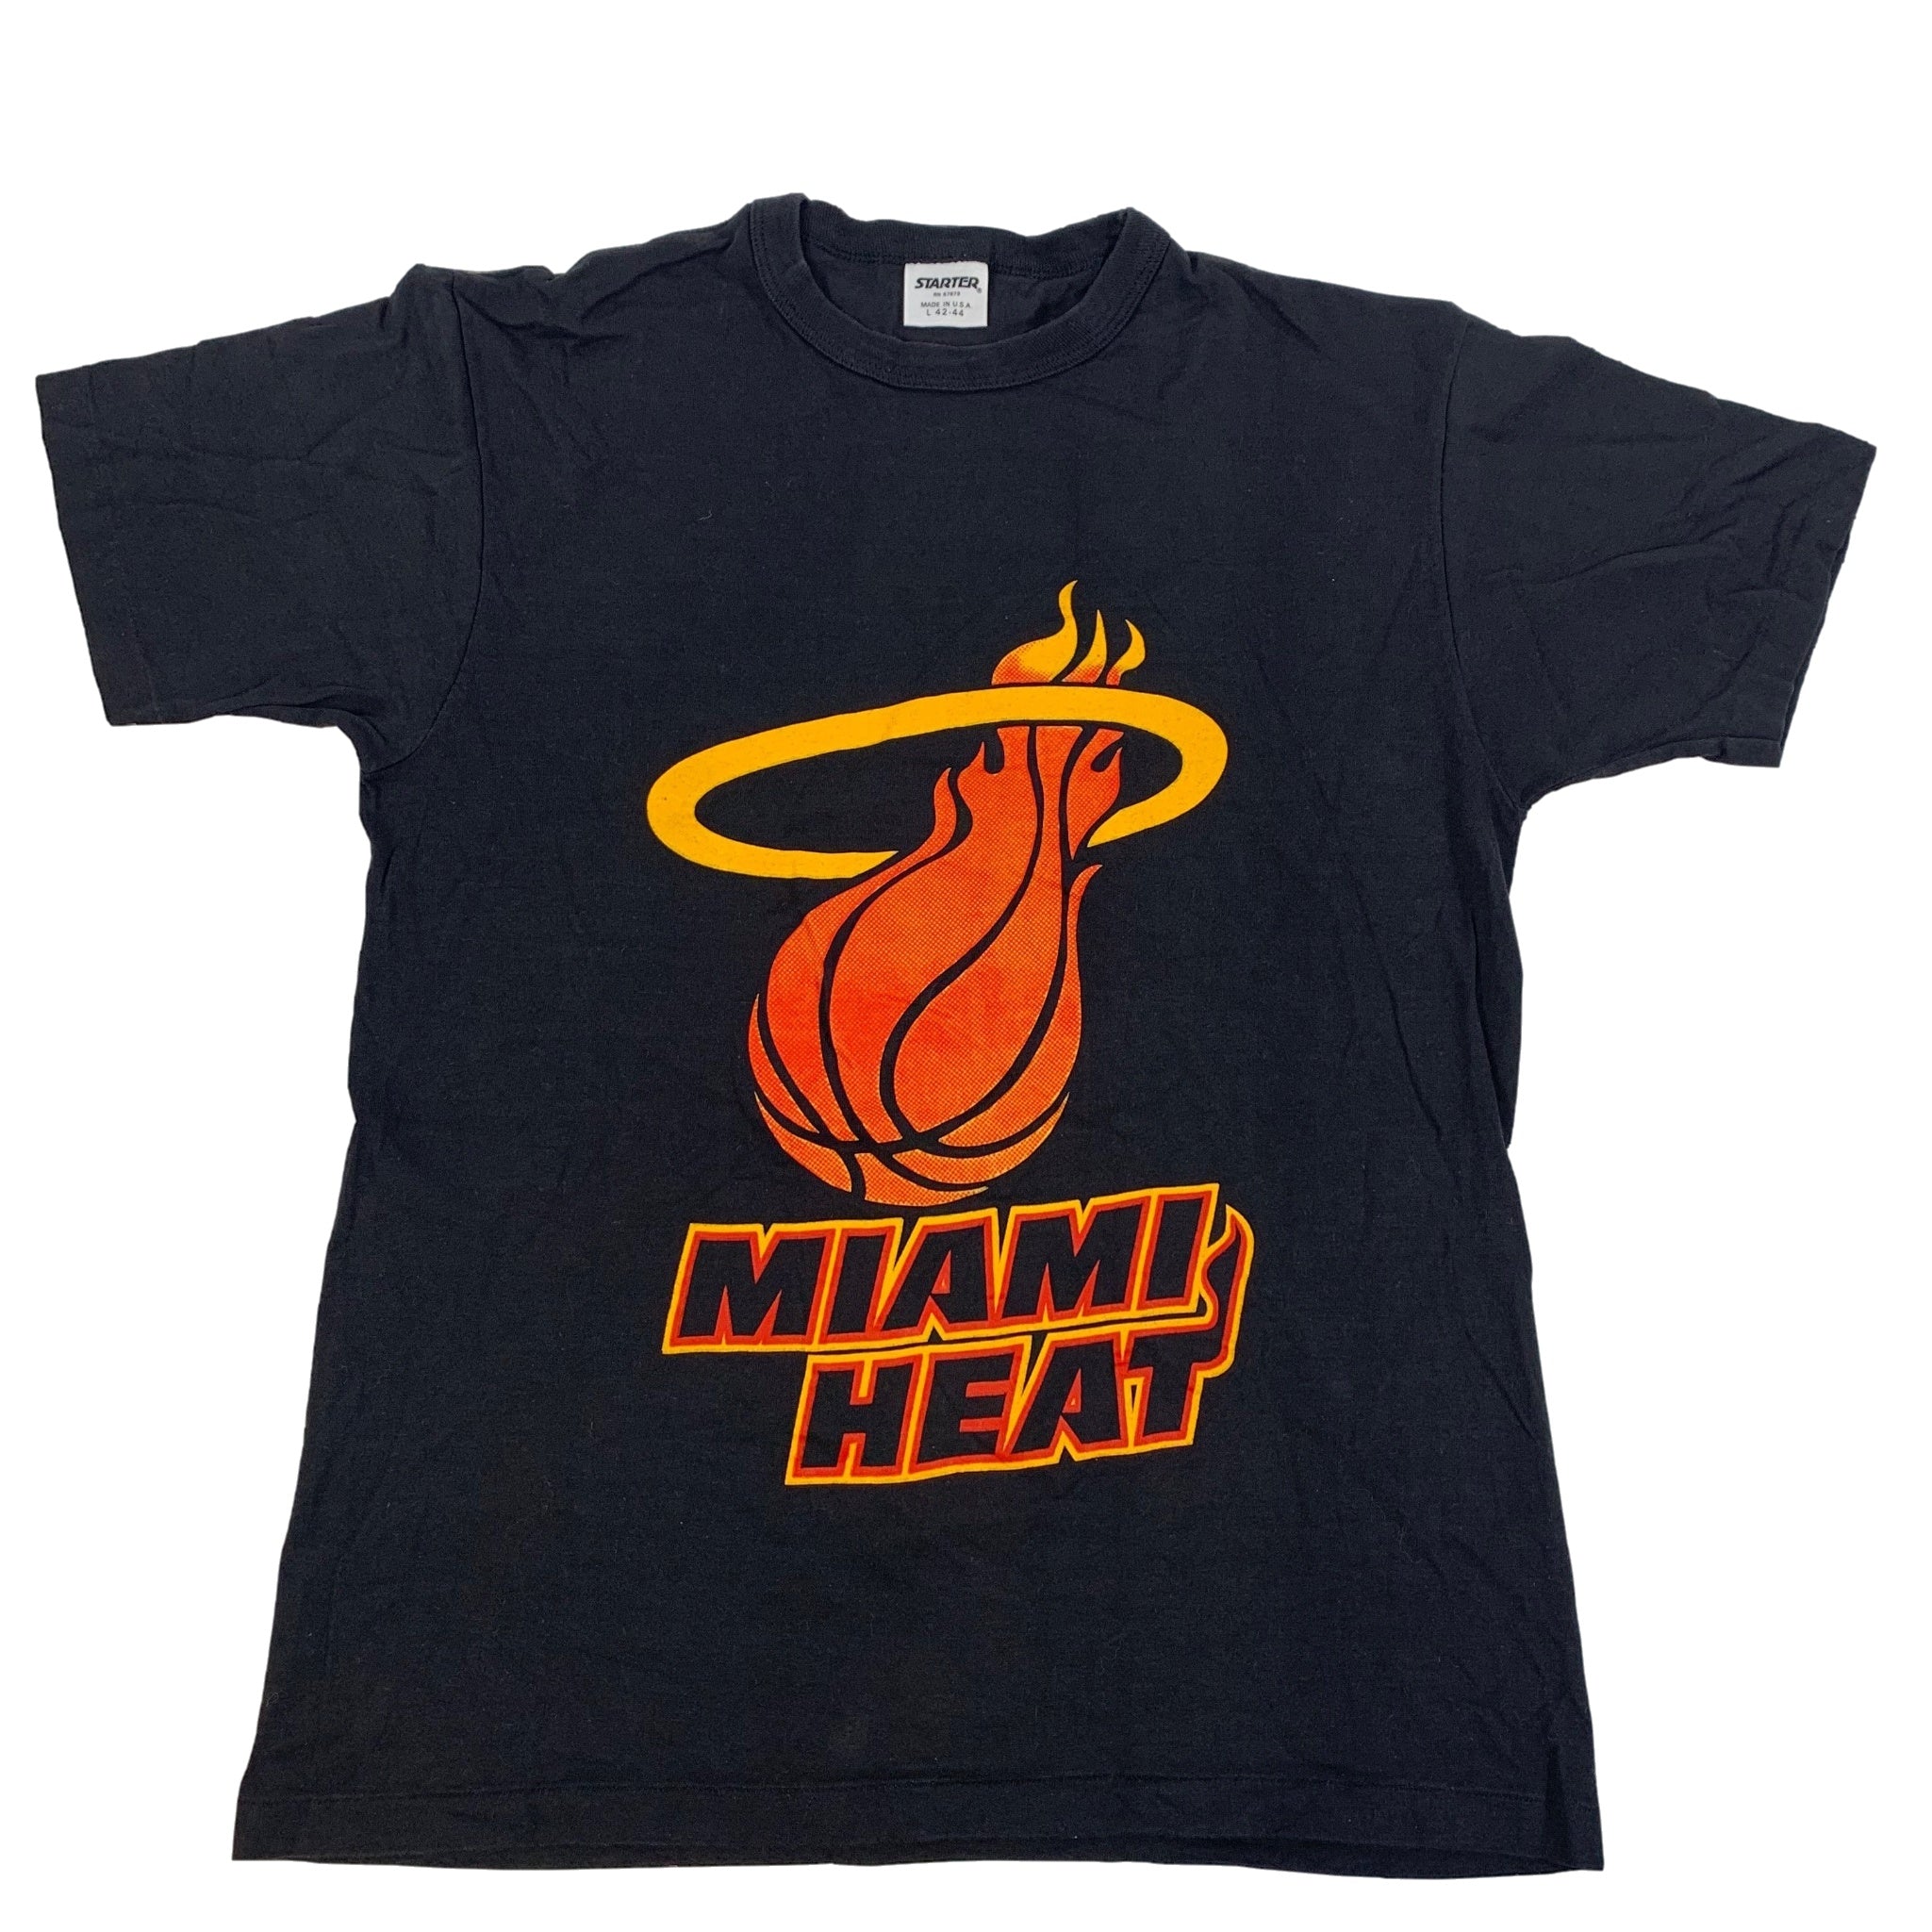 Miami Heat Legends Signatures Shirt - Vintagenclassic Tee